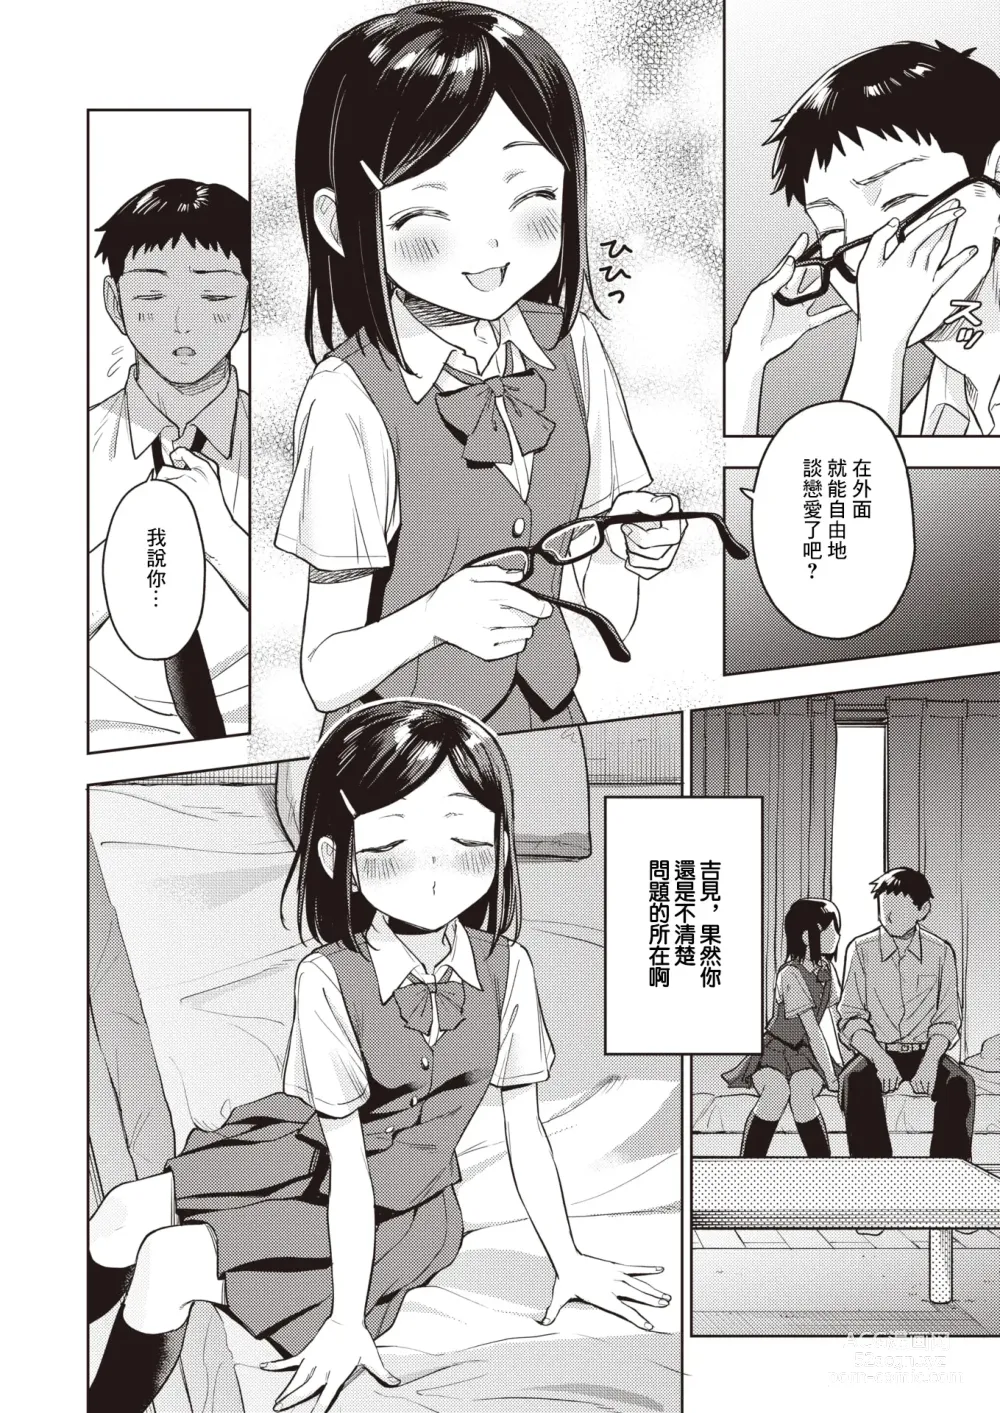 Page 7 of manga Curriculum